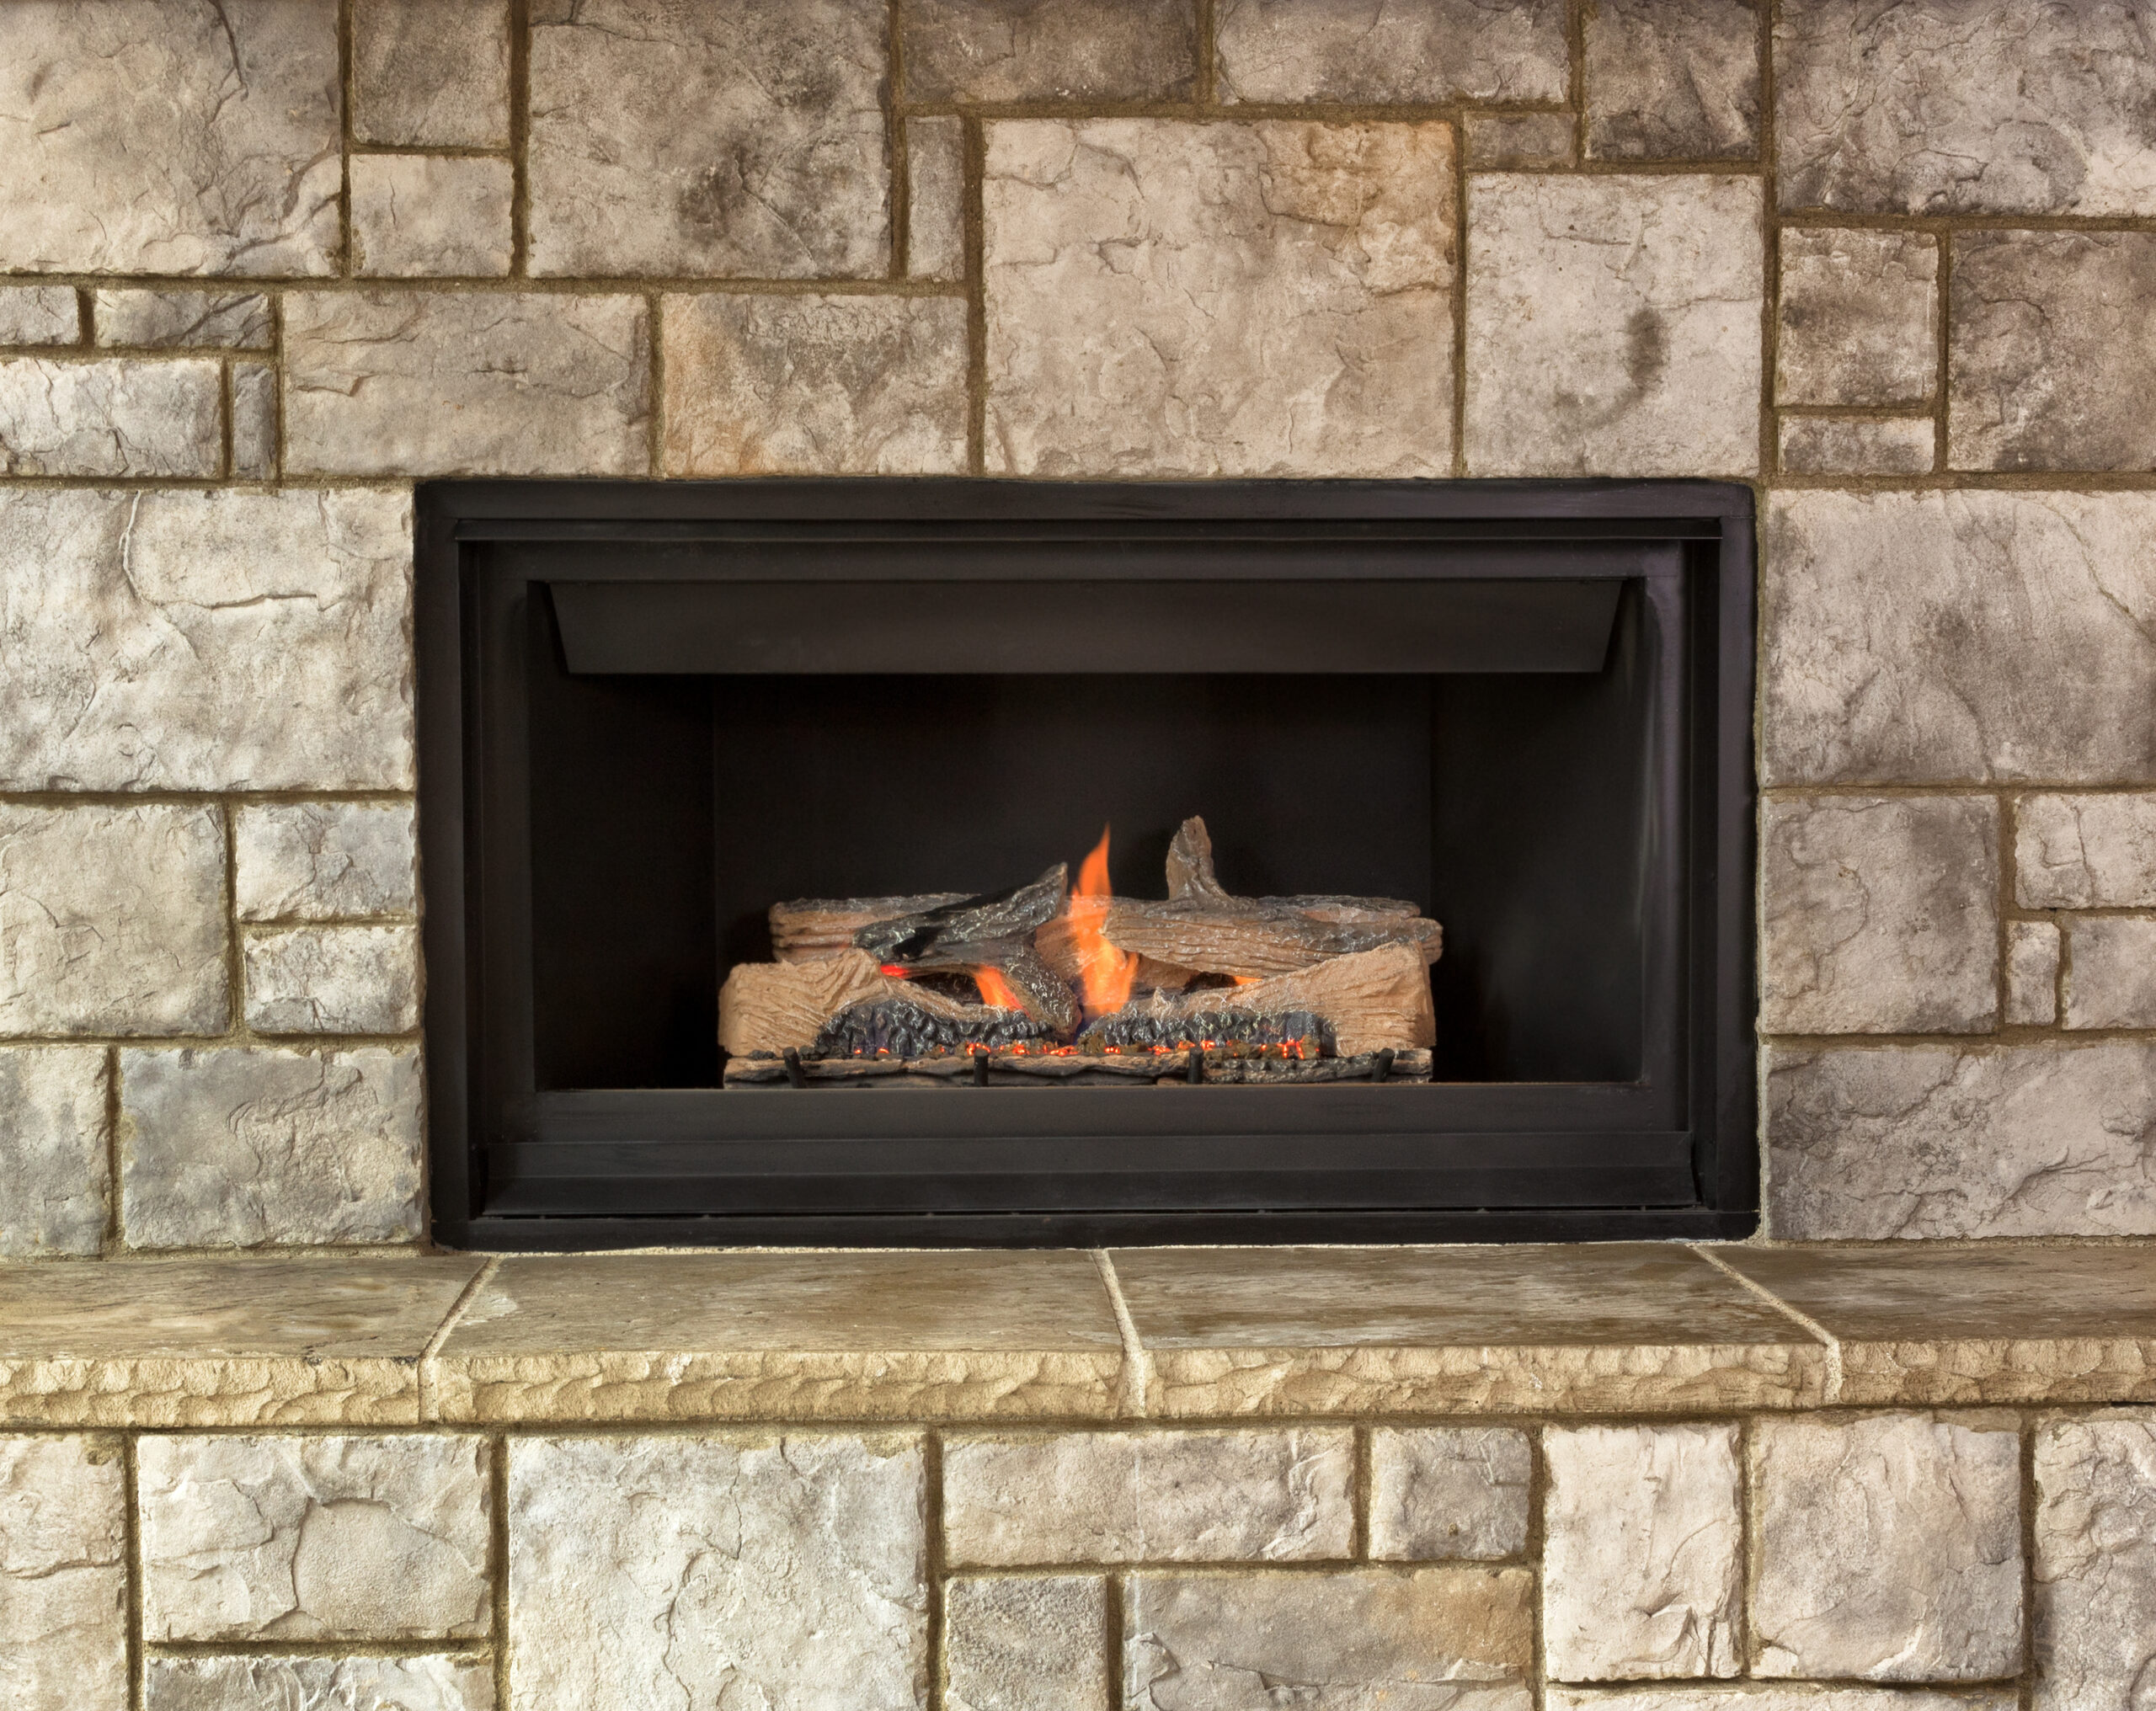 Gas fireplace insert emitting warm glow